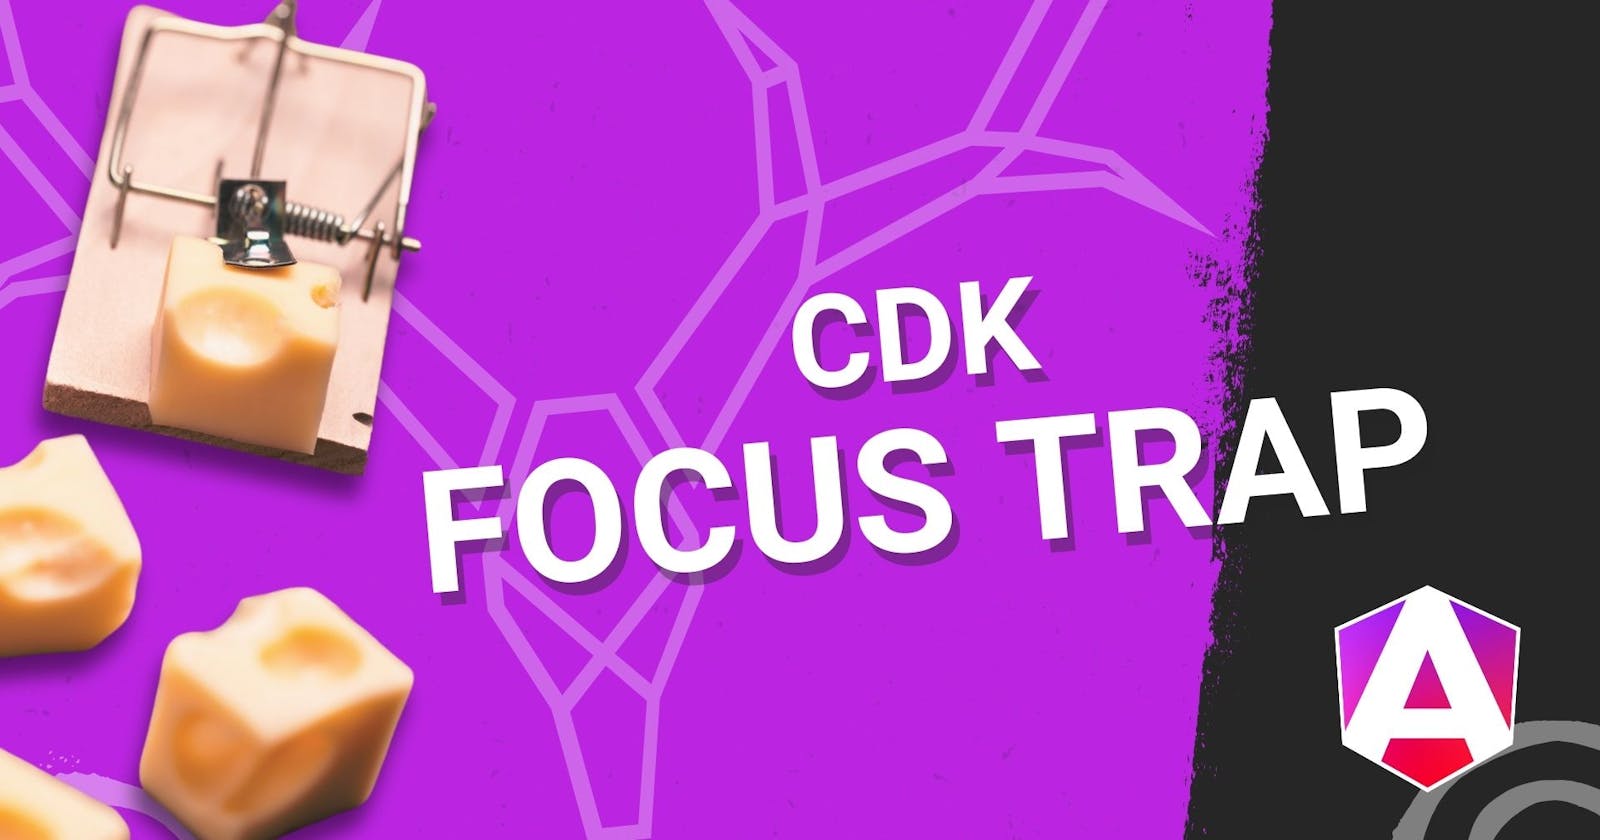 Using the Angular CDK Trap Focus Directive